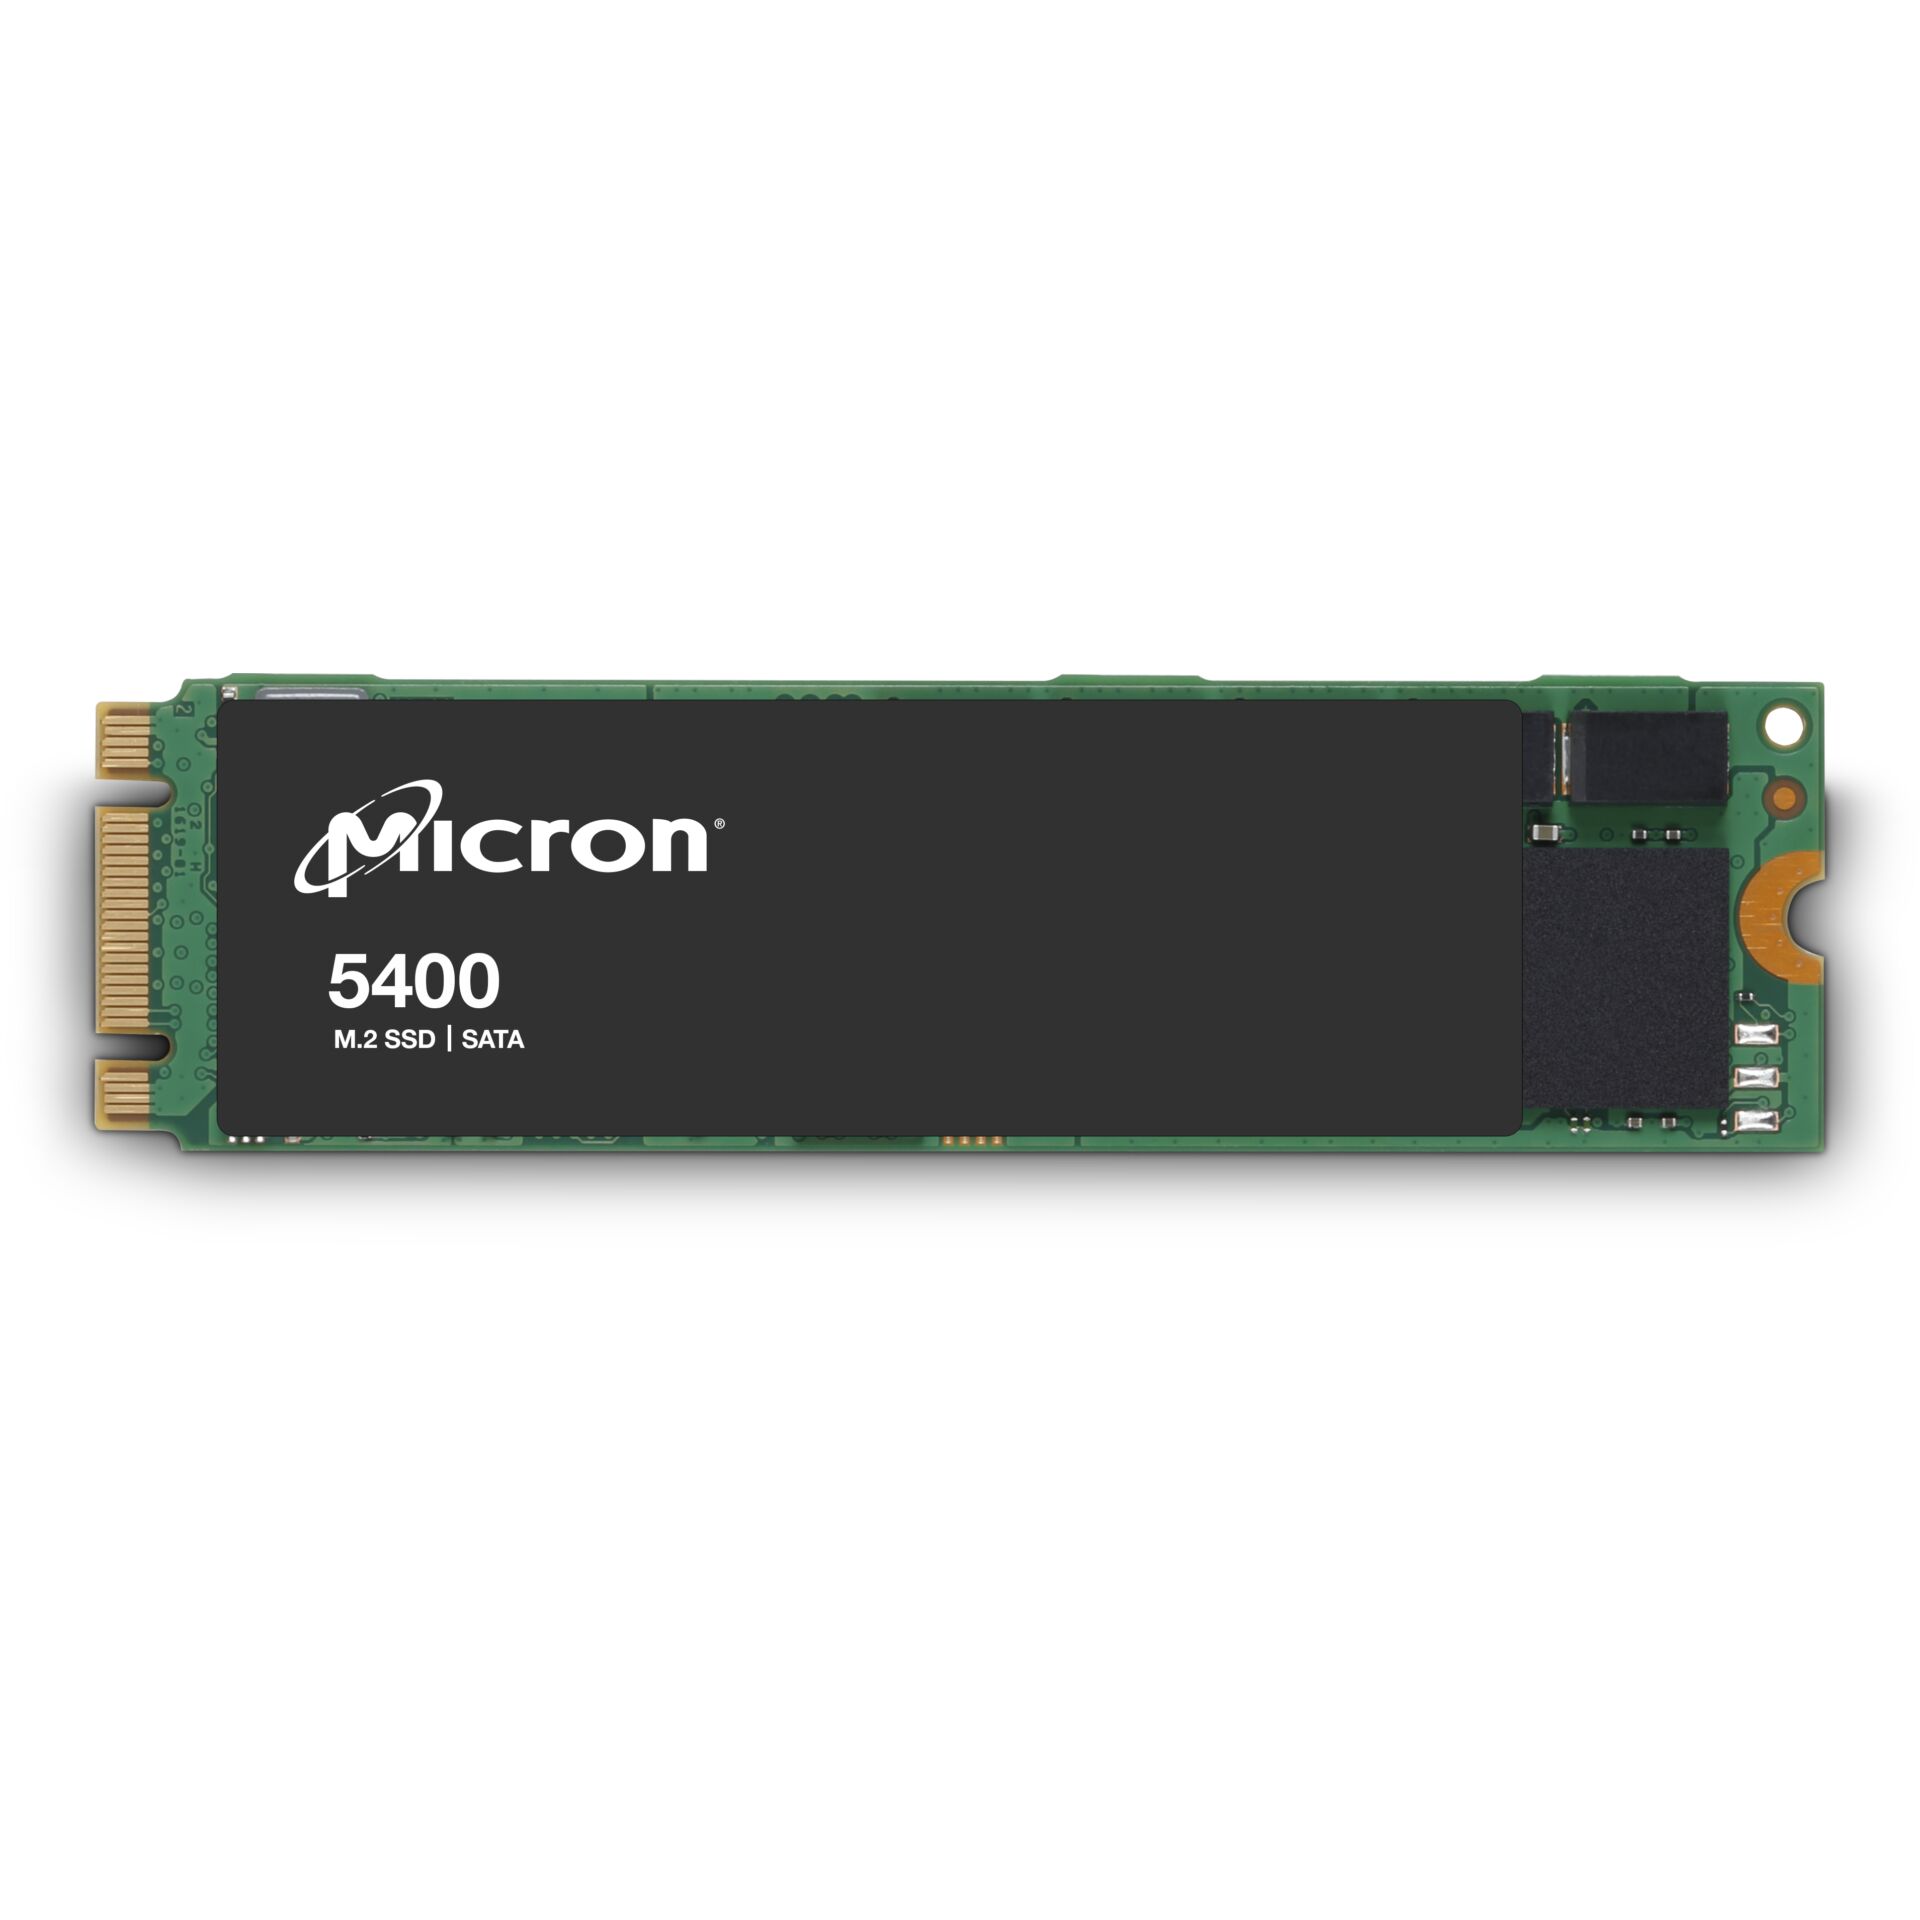 Micron 5400 PRO 480GB SATA M.2